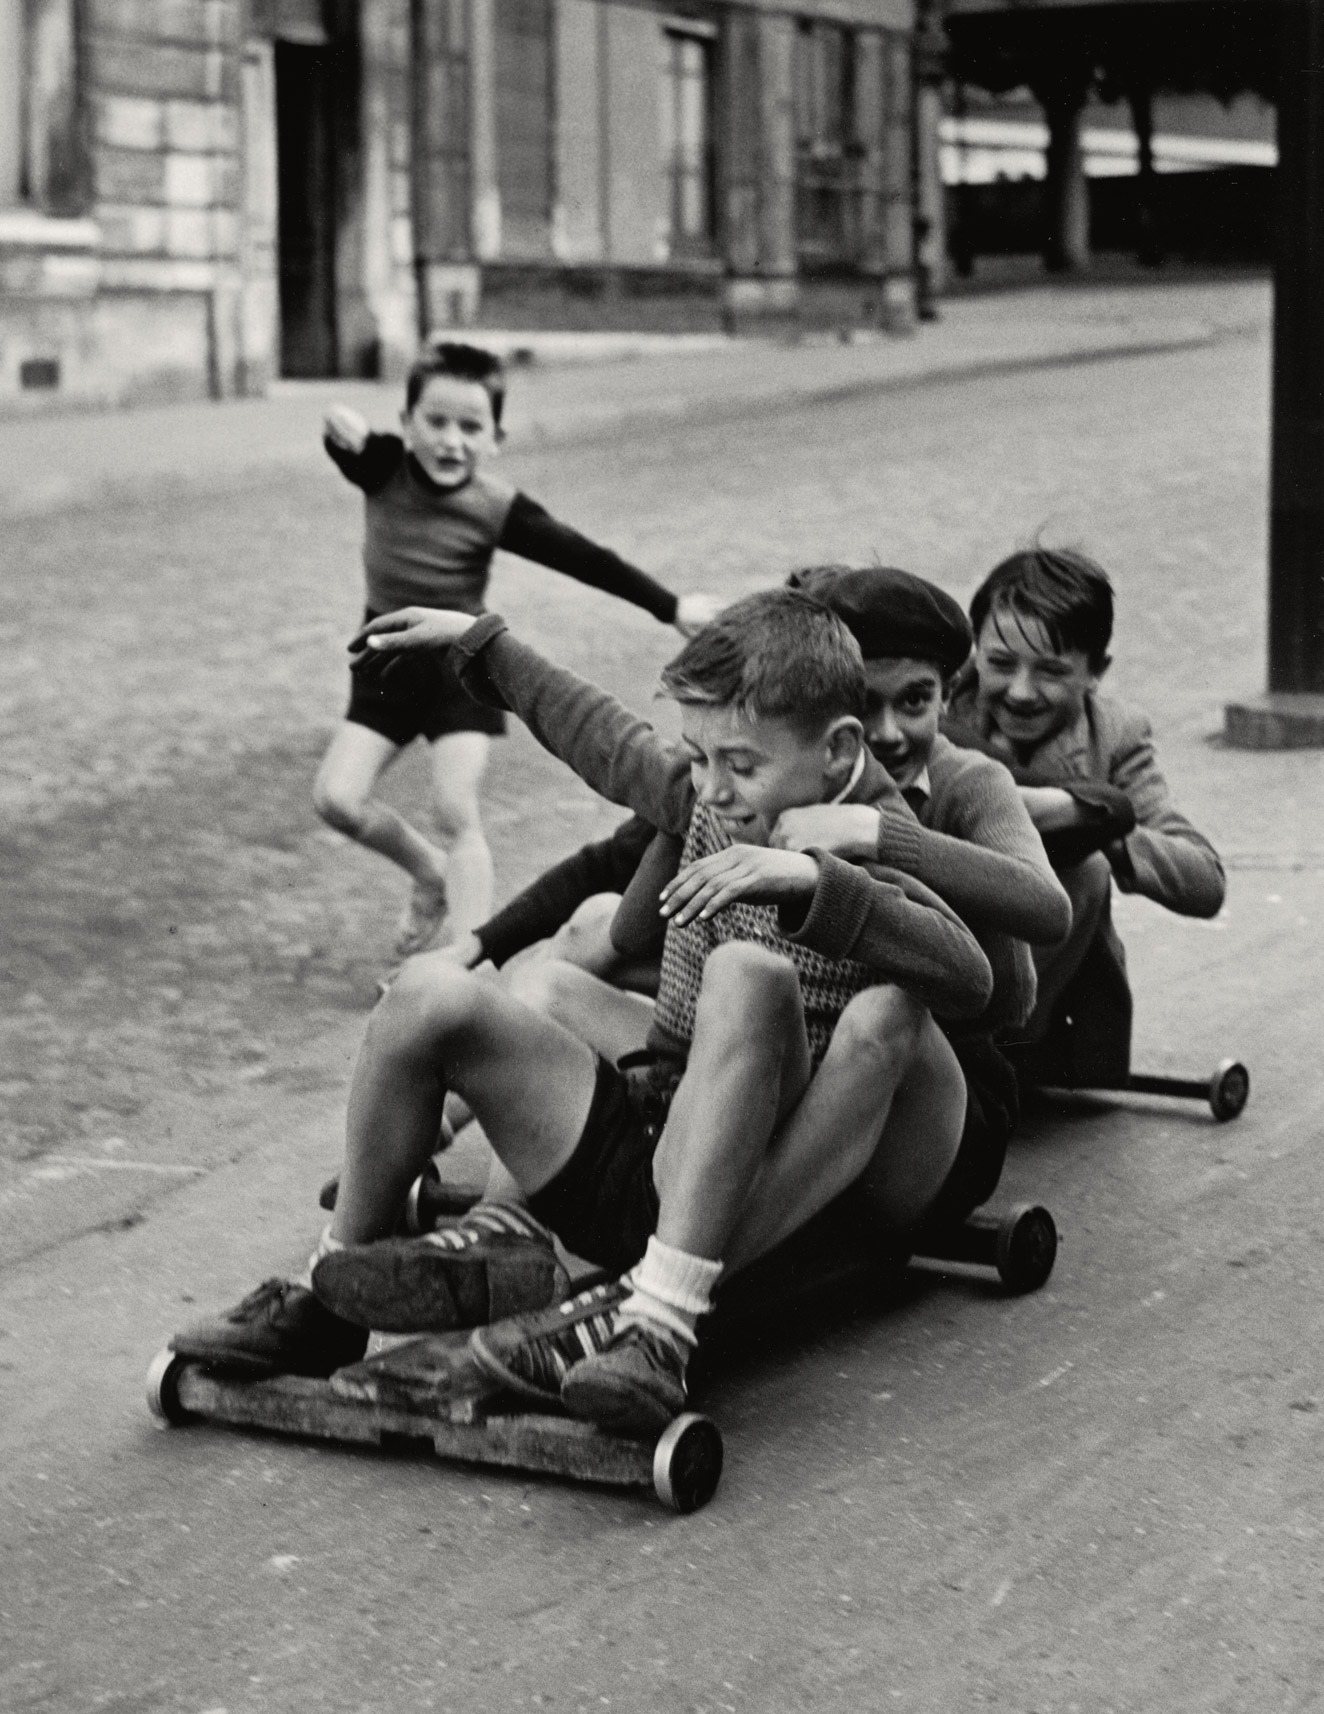 Kids playing on rue Edmond-Flamand, Paris, 1952.